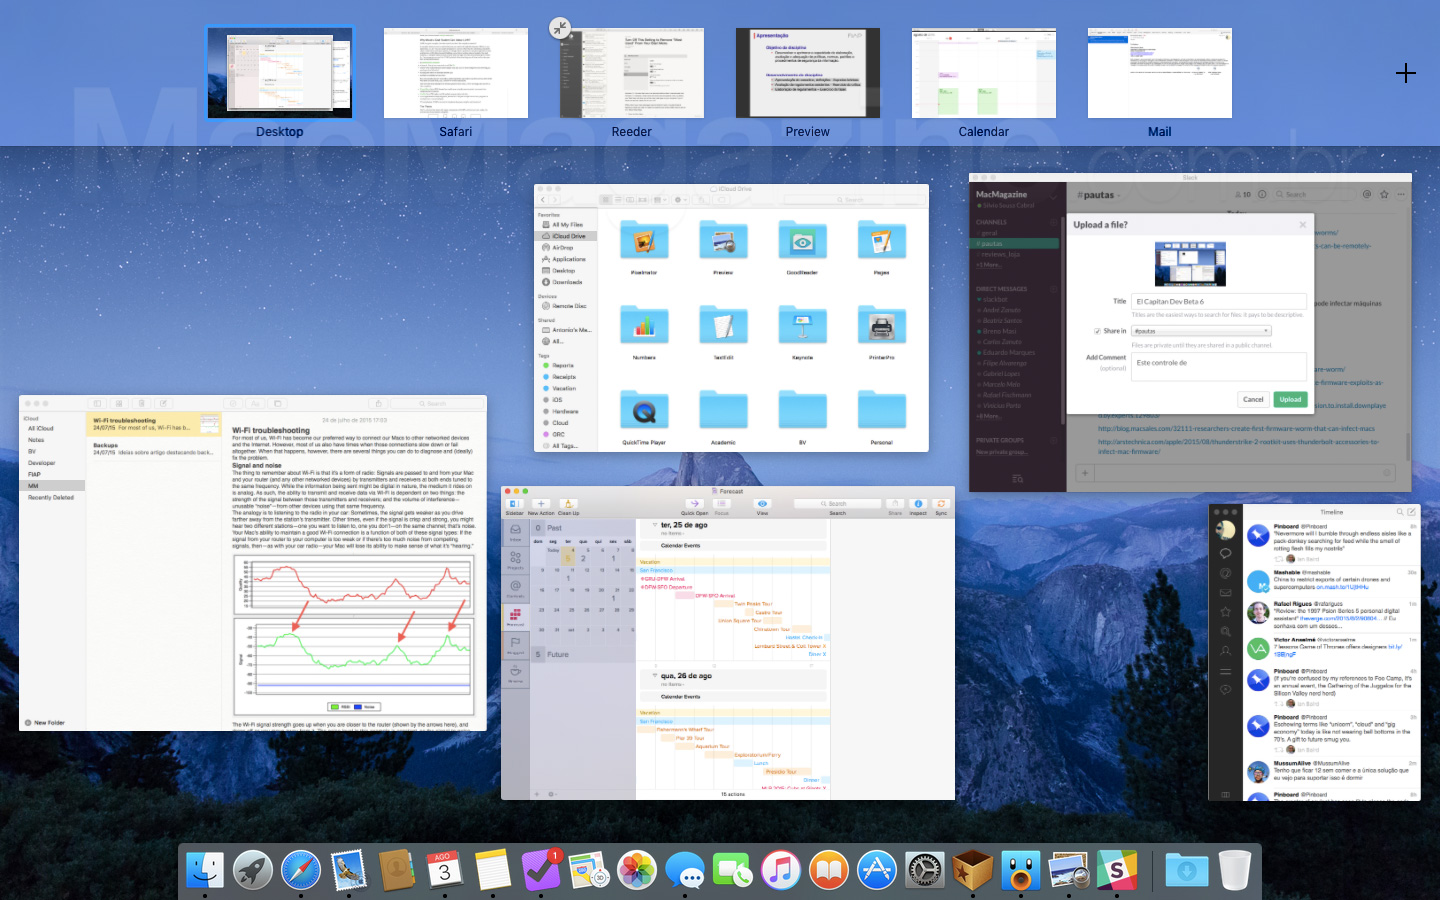 Screenshot do OS X El Capitan 10.11